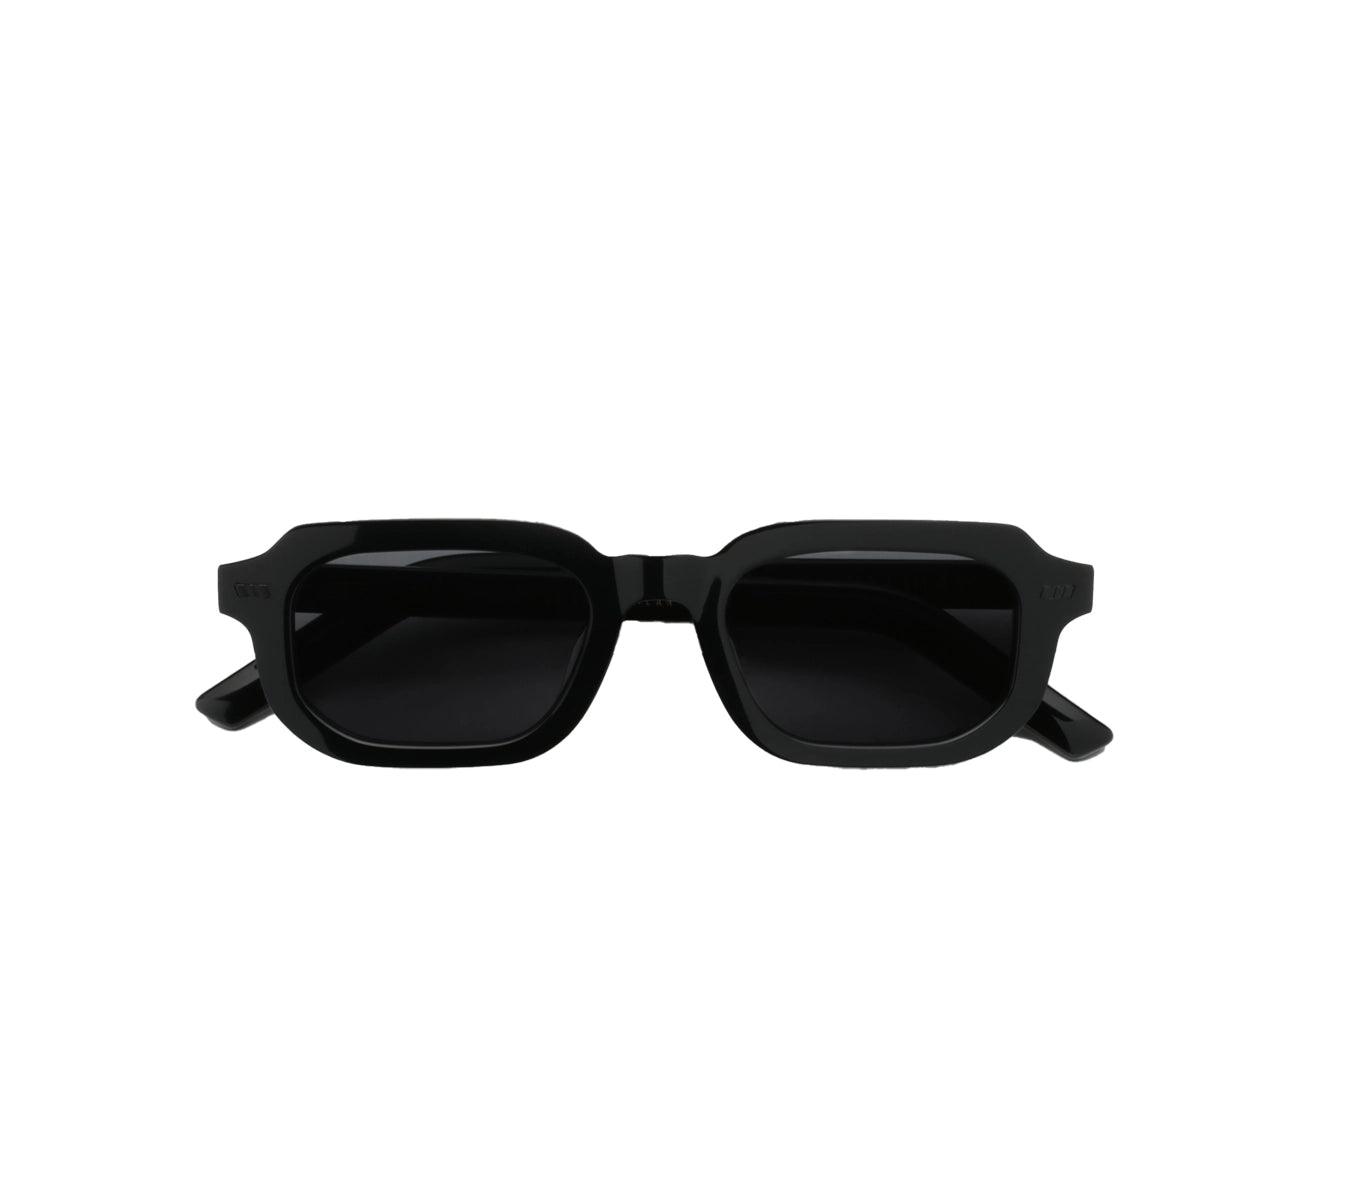 Gast Pai - Black - One size - Sunglasses